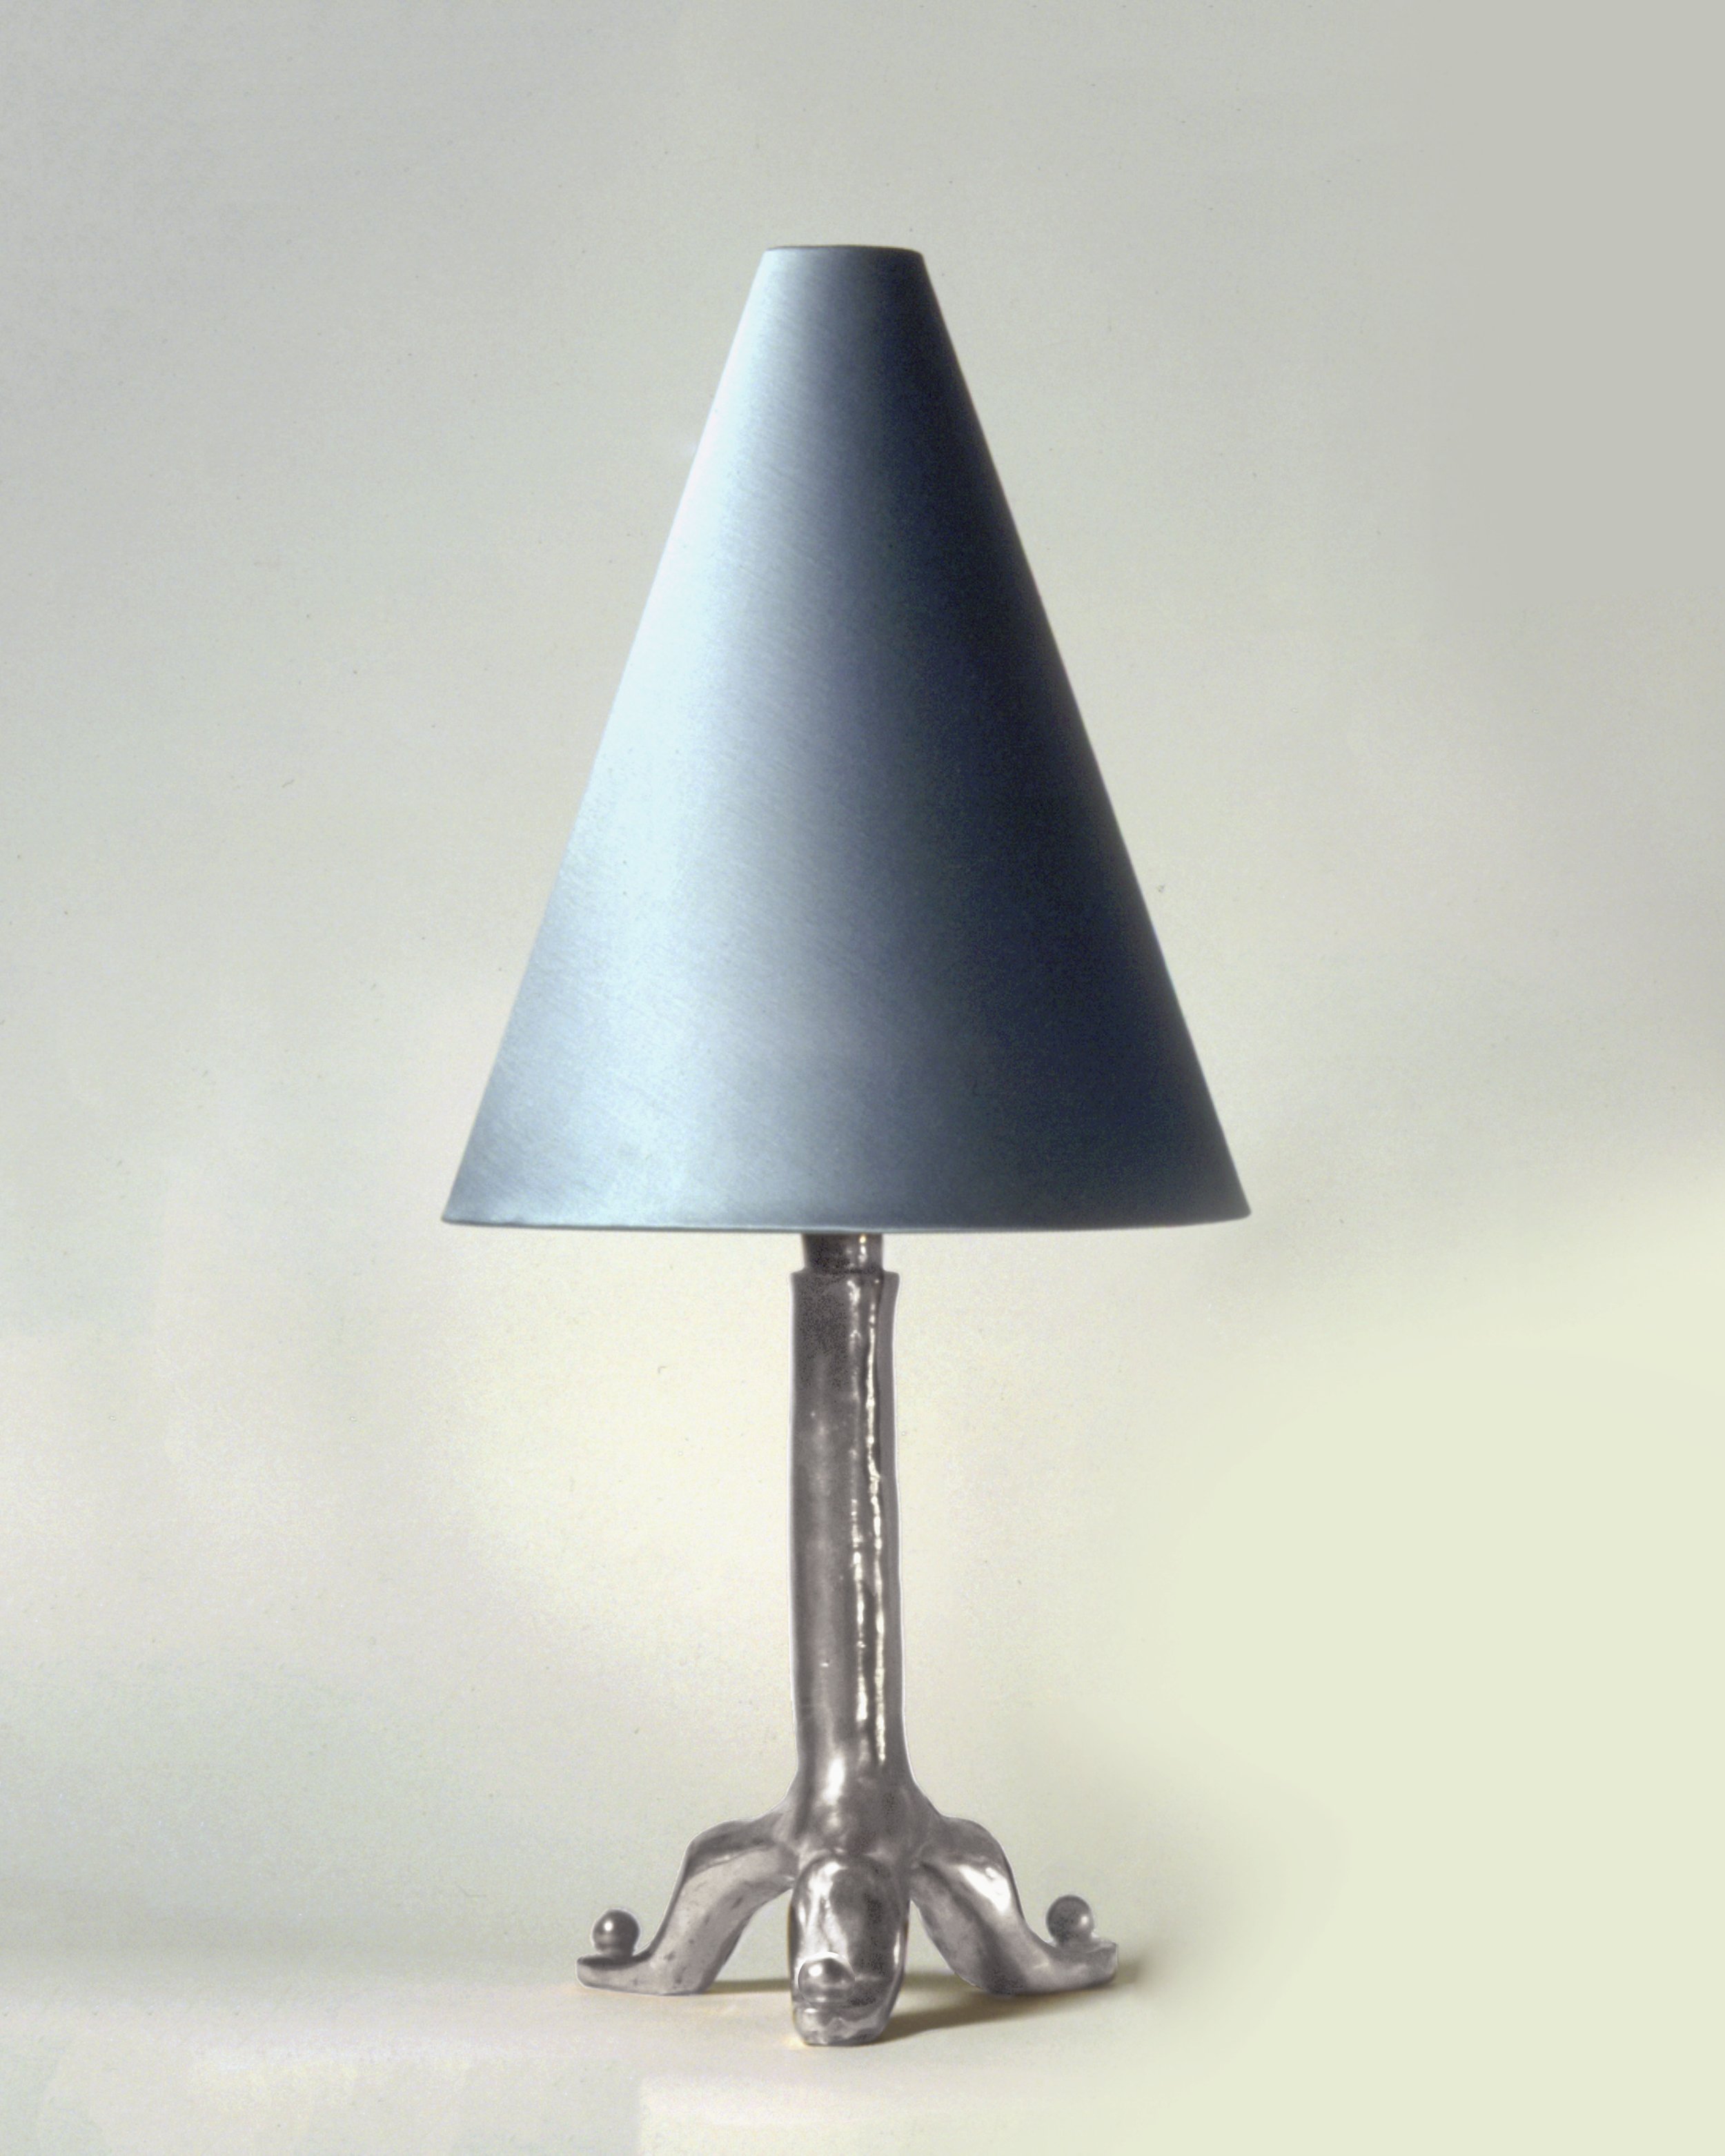 11.B&G Table Lamp 'Belgravia' copy 2.jpg